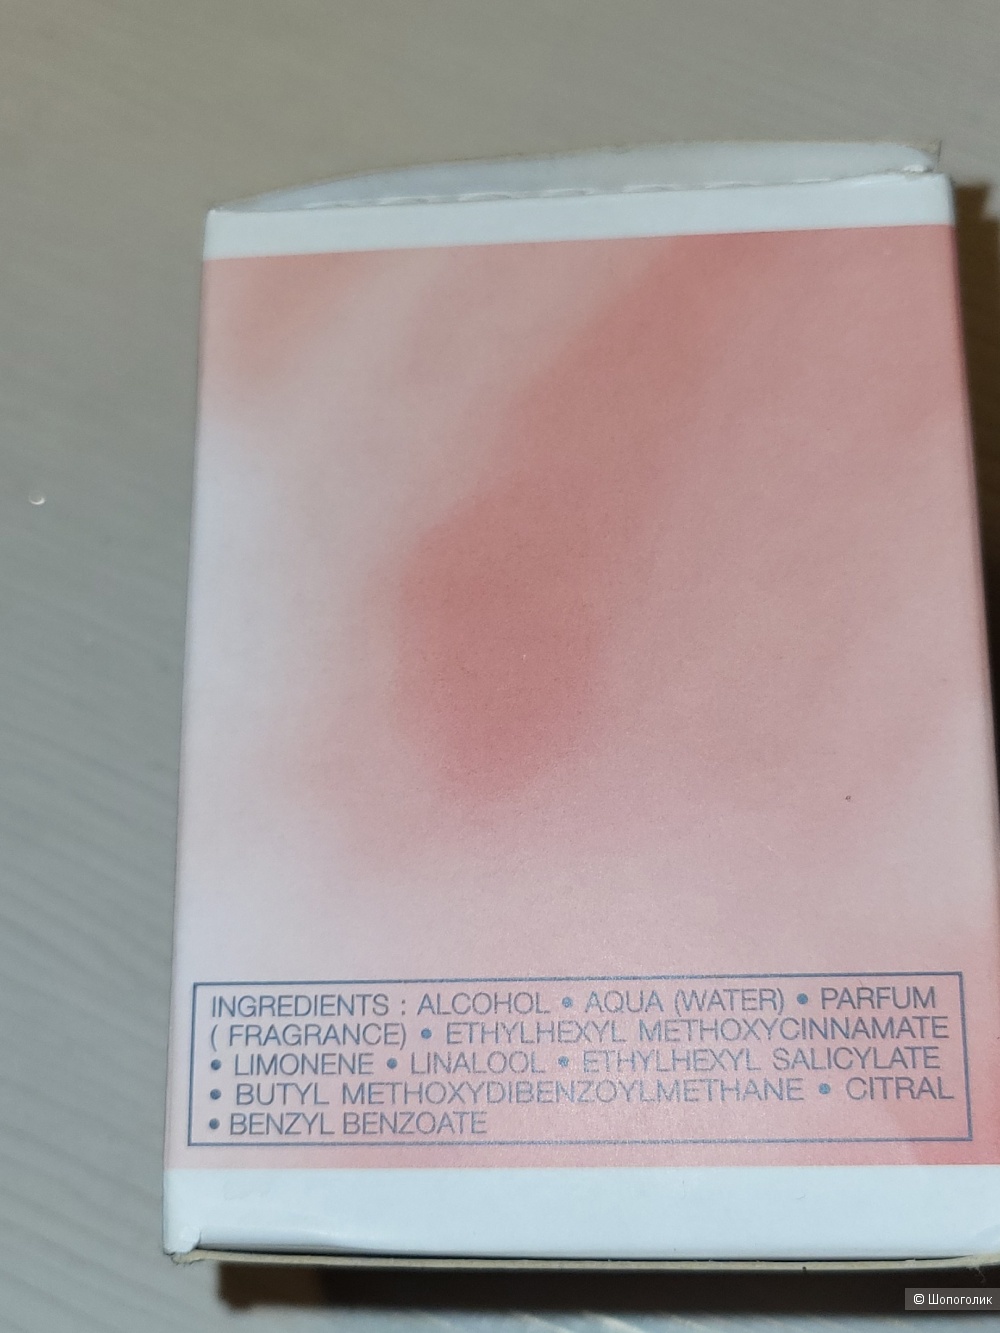 Secrets de Volupte ID Parfums,60 мл